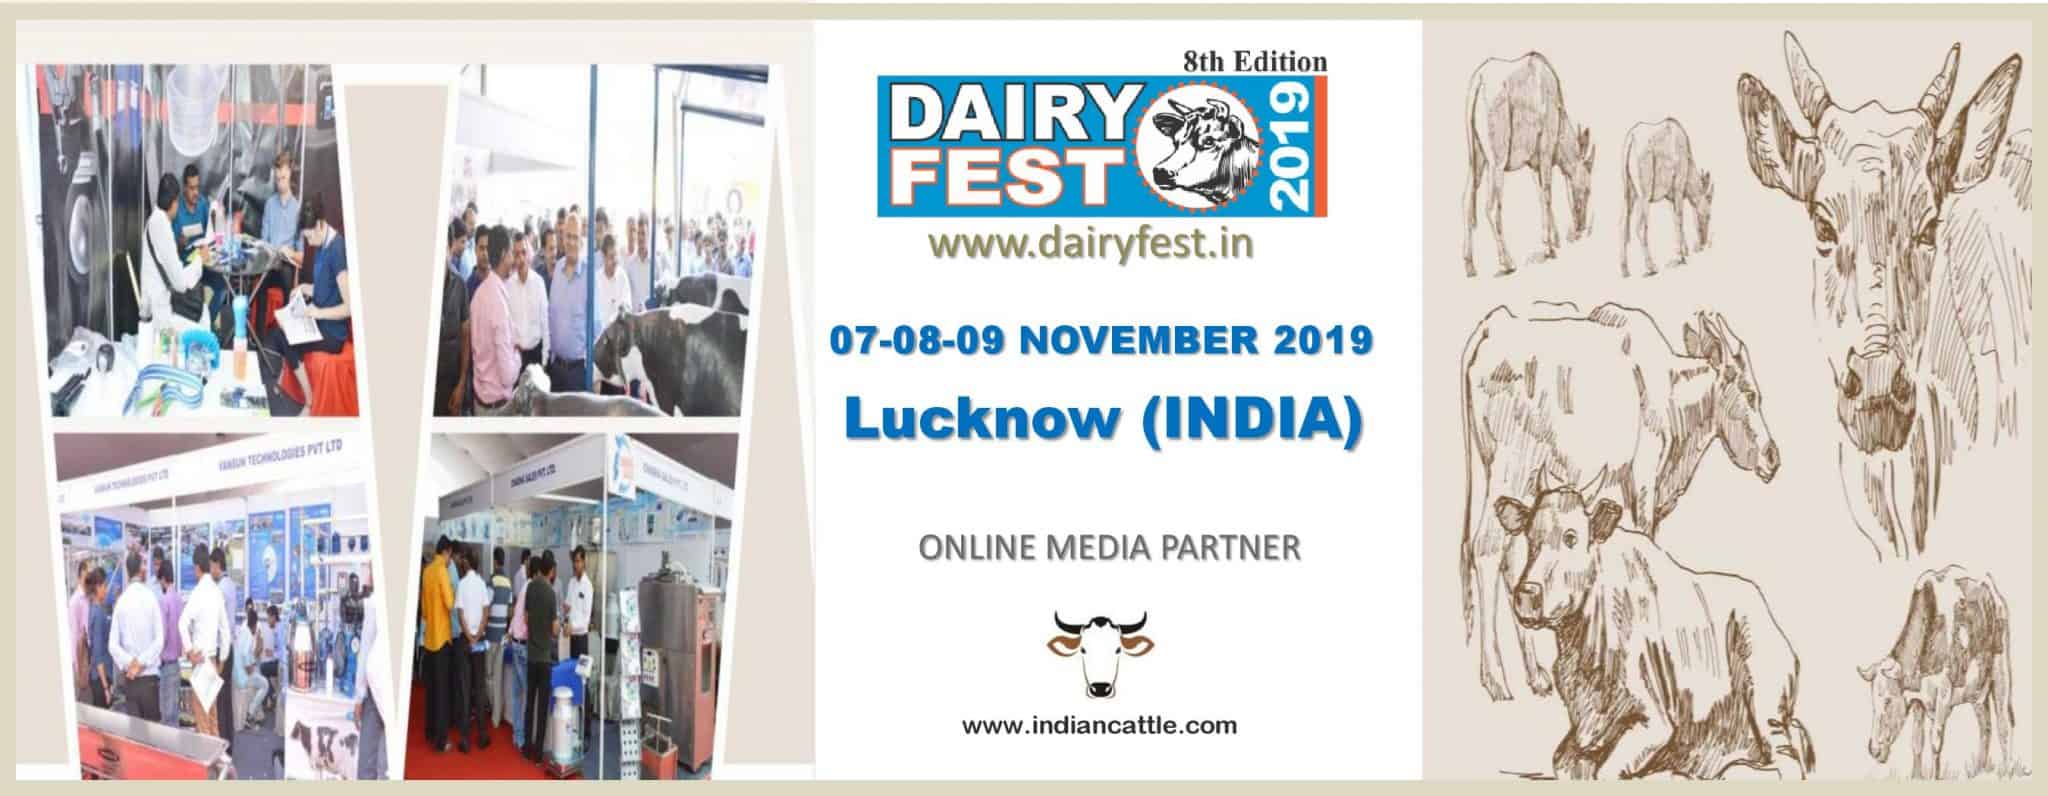 Dairy Fest 2019